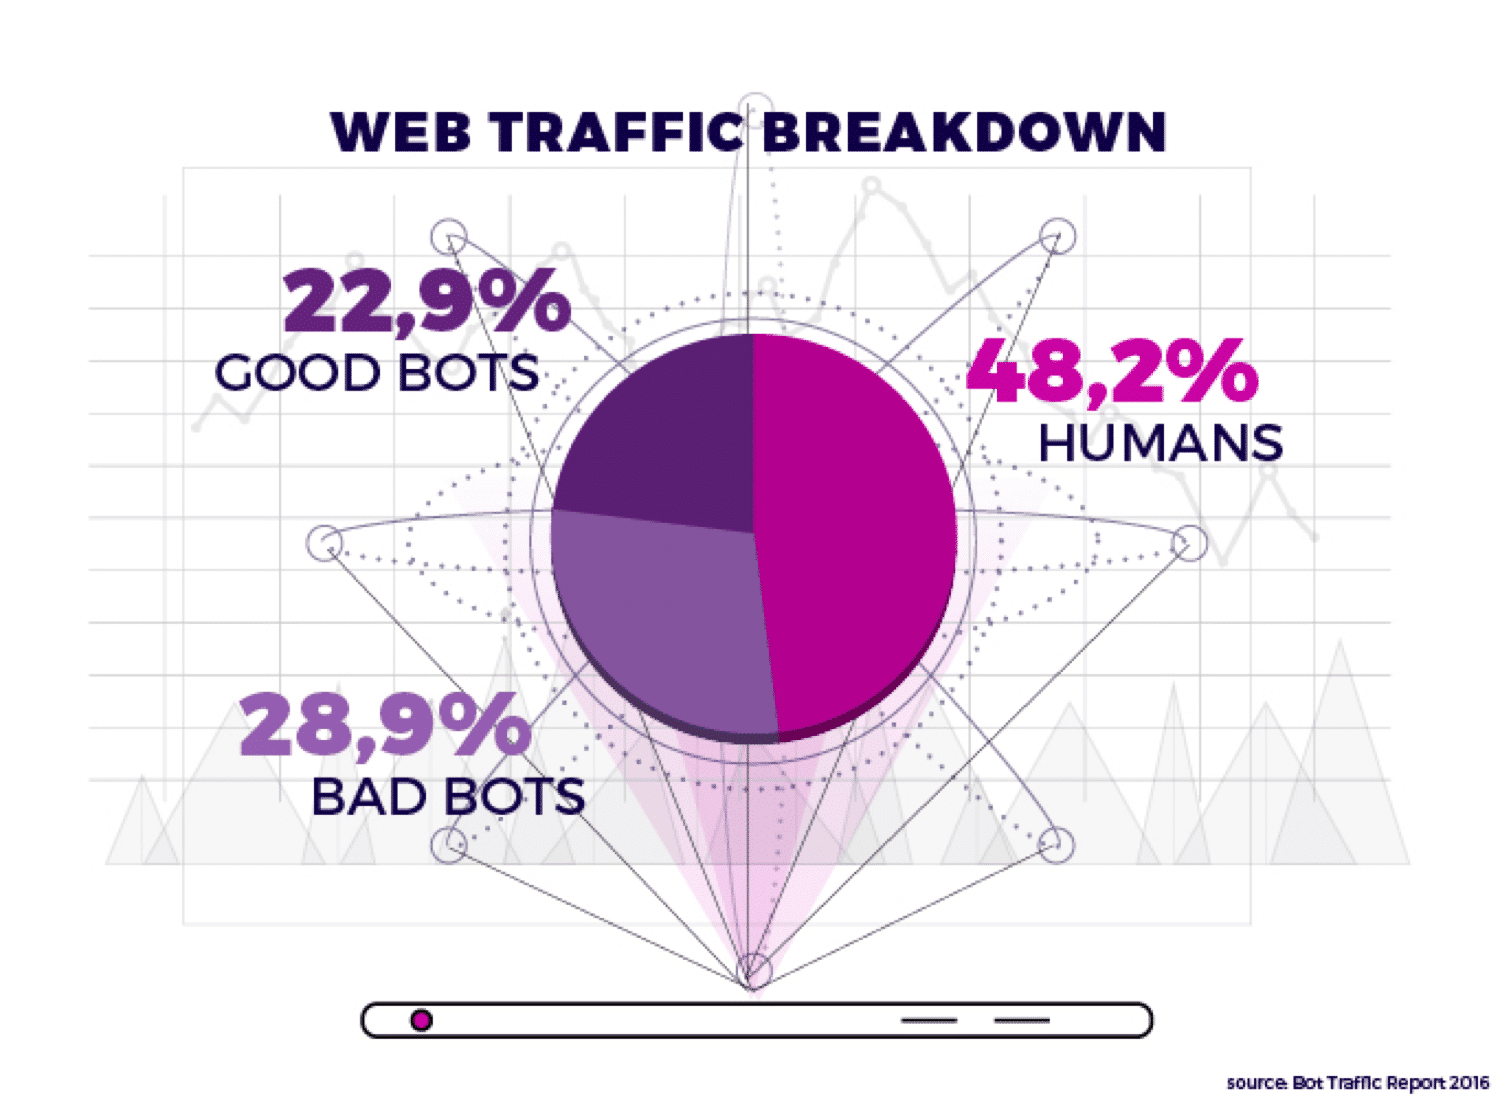 Web traffic breakdown (good bots vs bad bots vs humans)